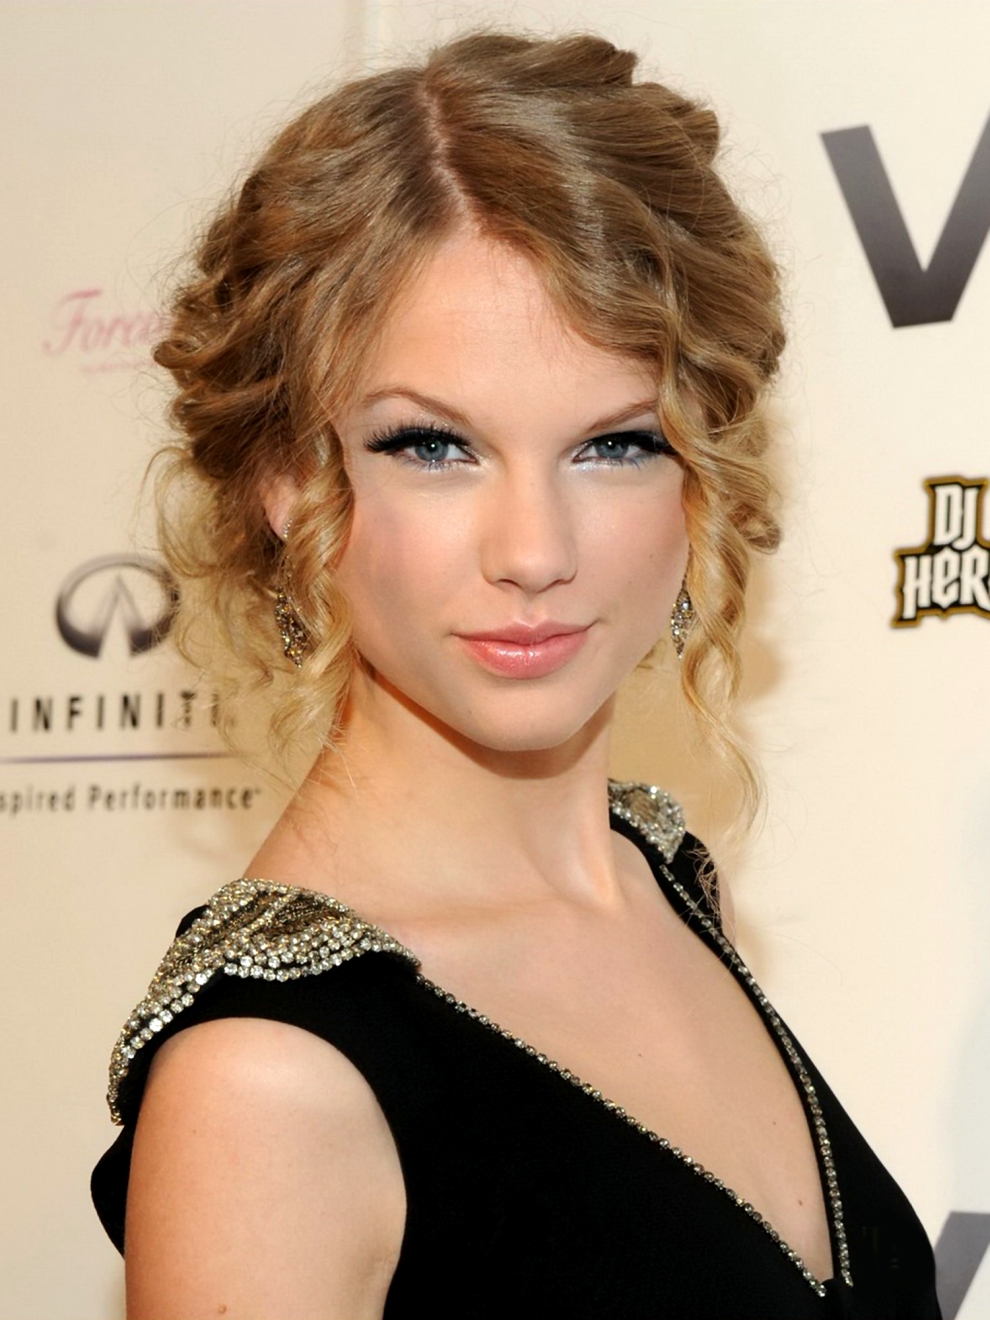 Taylor Swift - Vevo